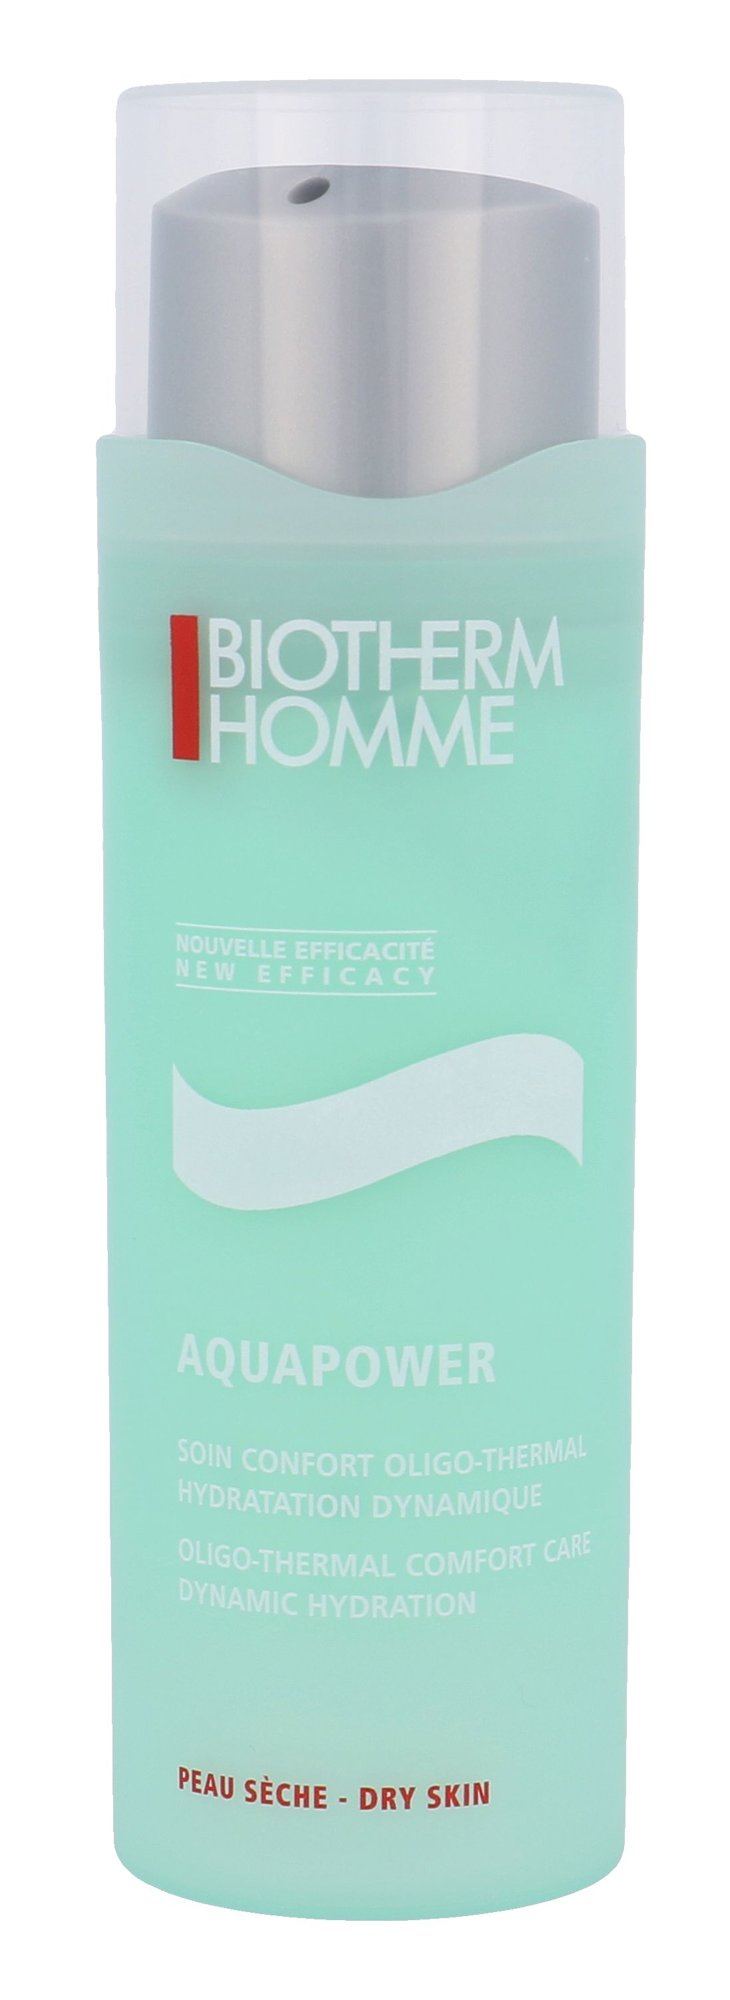 Biotherm Homme Aquapower Oligo Thermal Comfort Care 75ml dieninis kremas